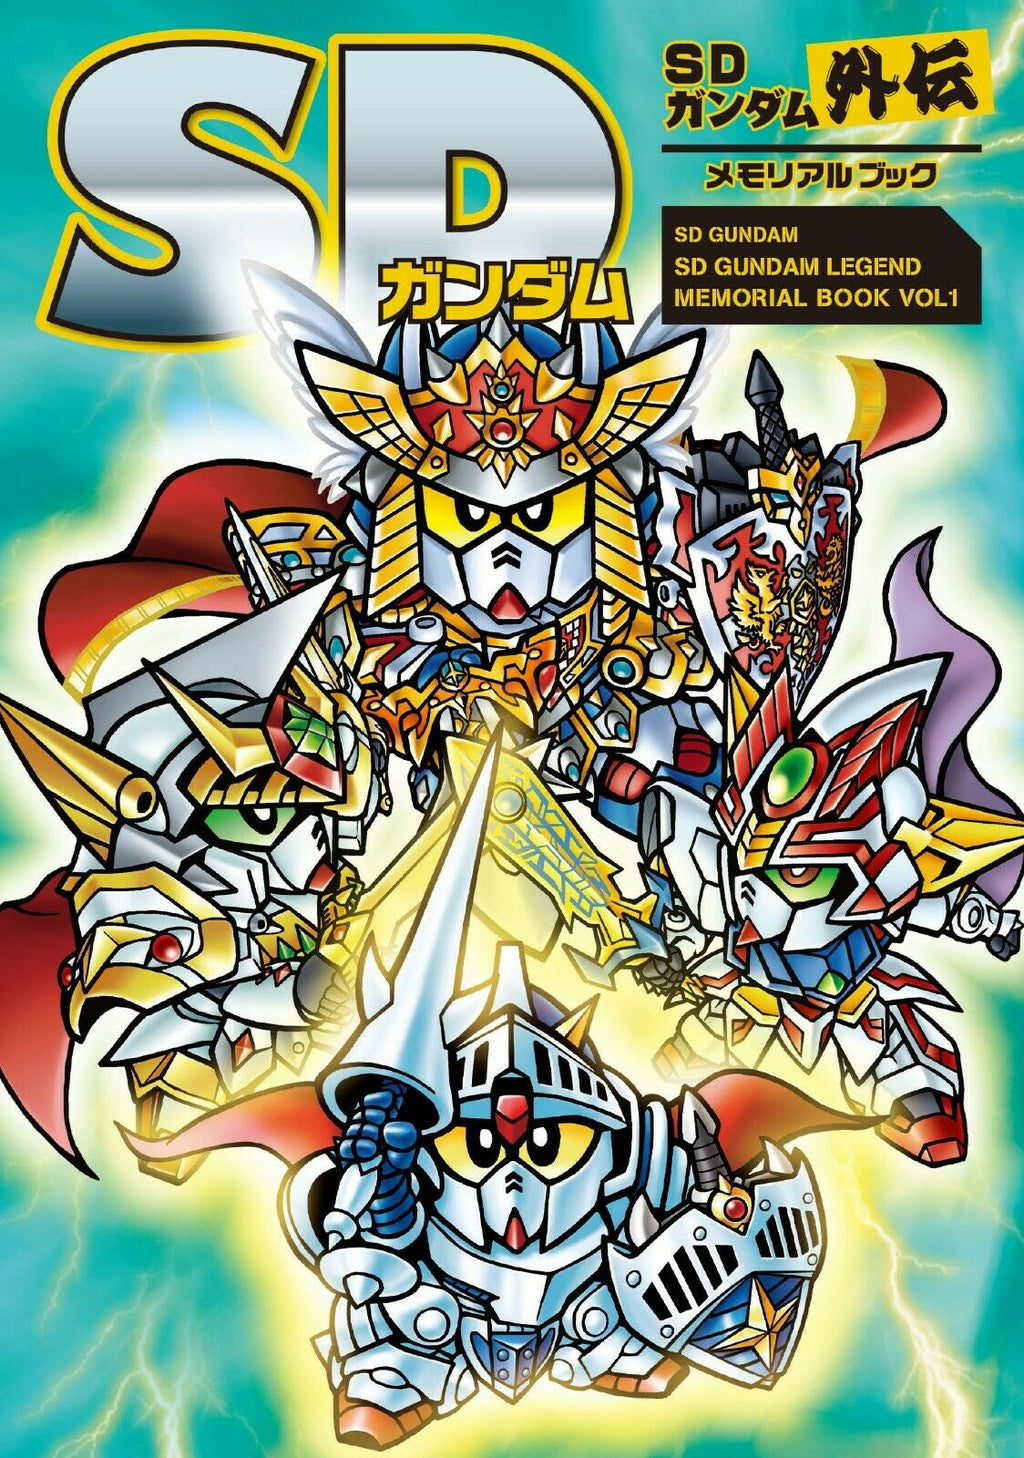 NEW' SD Gundam Legend Memorial Book Vol.1 | JAPAN Art Book Anime